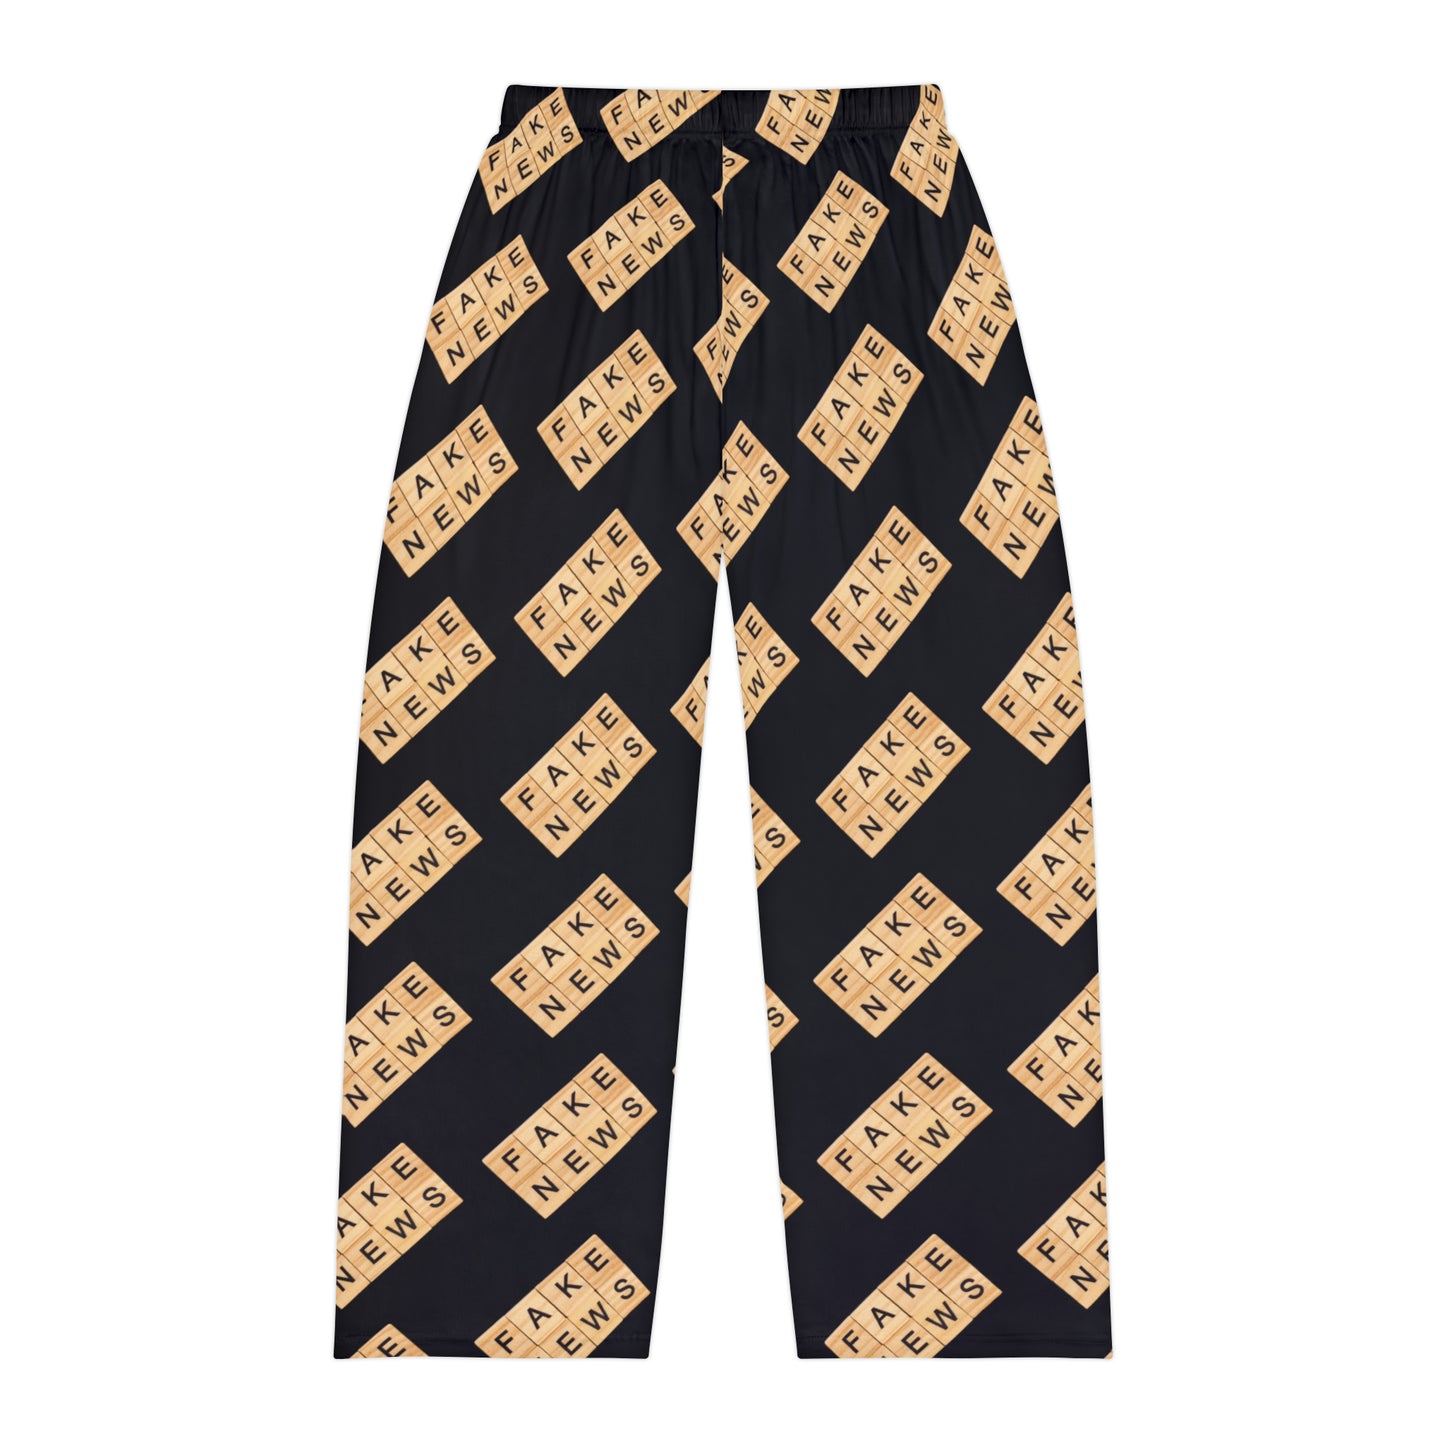 Fake News Scrabble Tiles Wooden Black Men's Polyester Lounge Comfy Pajama Pants